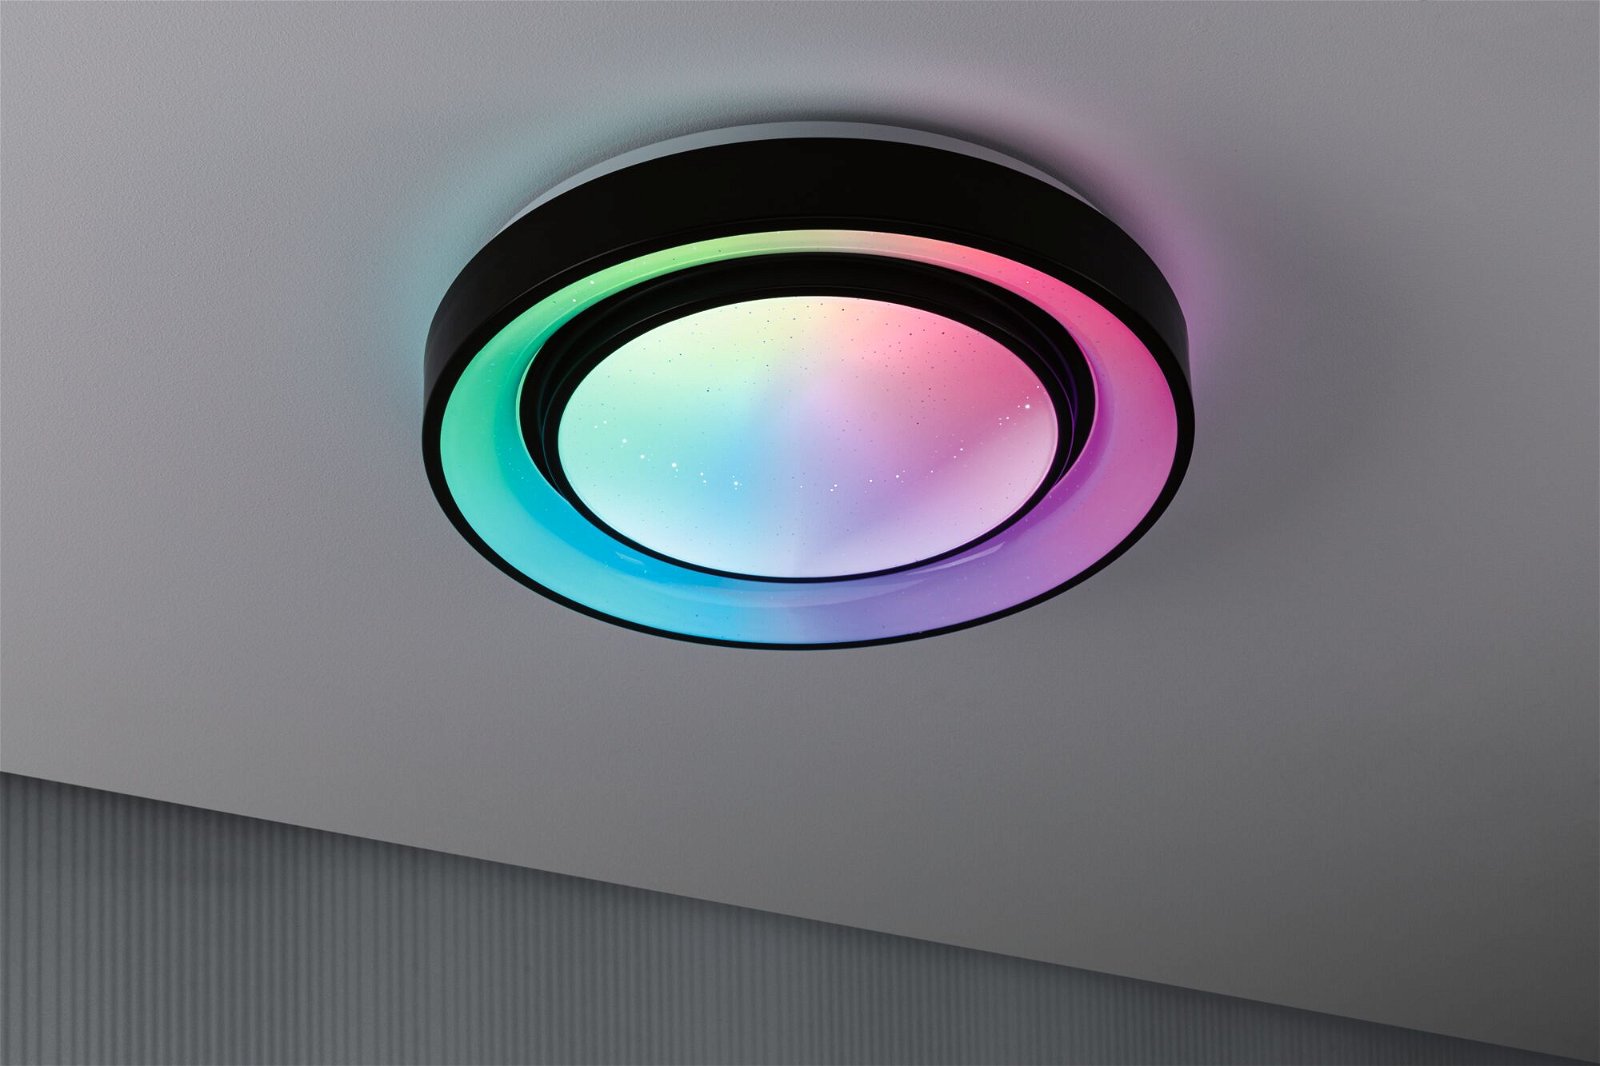 LED-plafondlamp Rainbow met regenboogeffect RGBW+ 750lm 230V 22W dimbaar Zwart/Wit